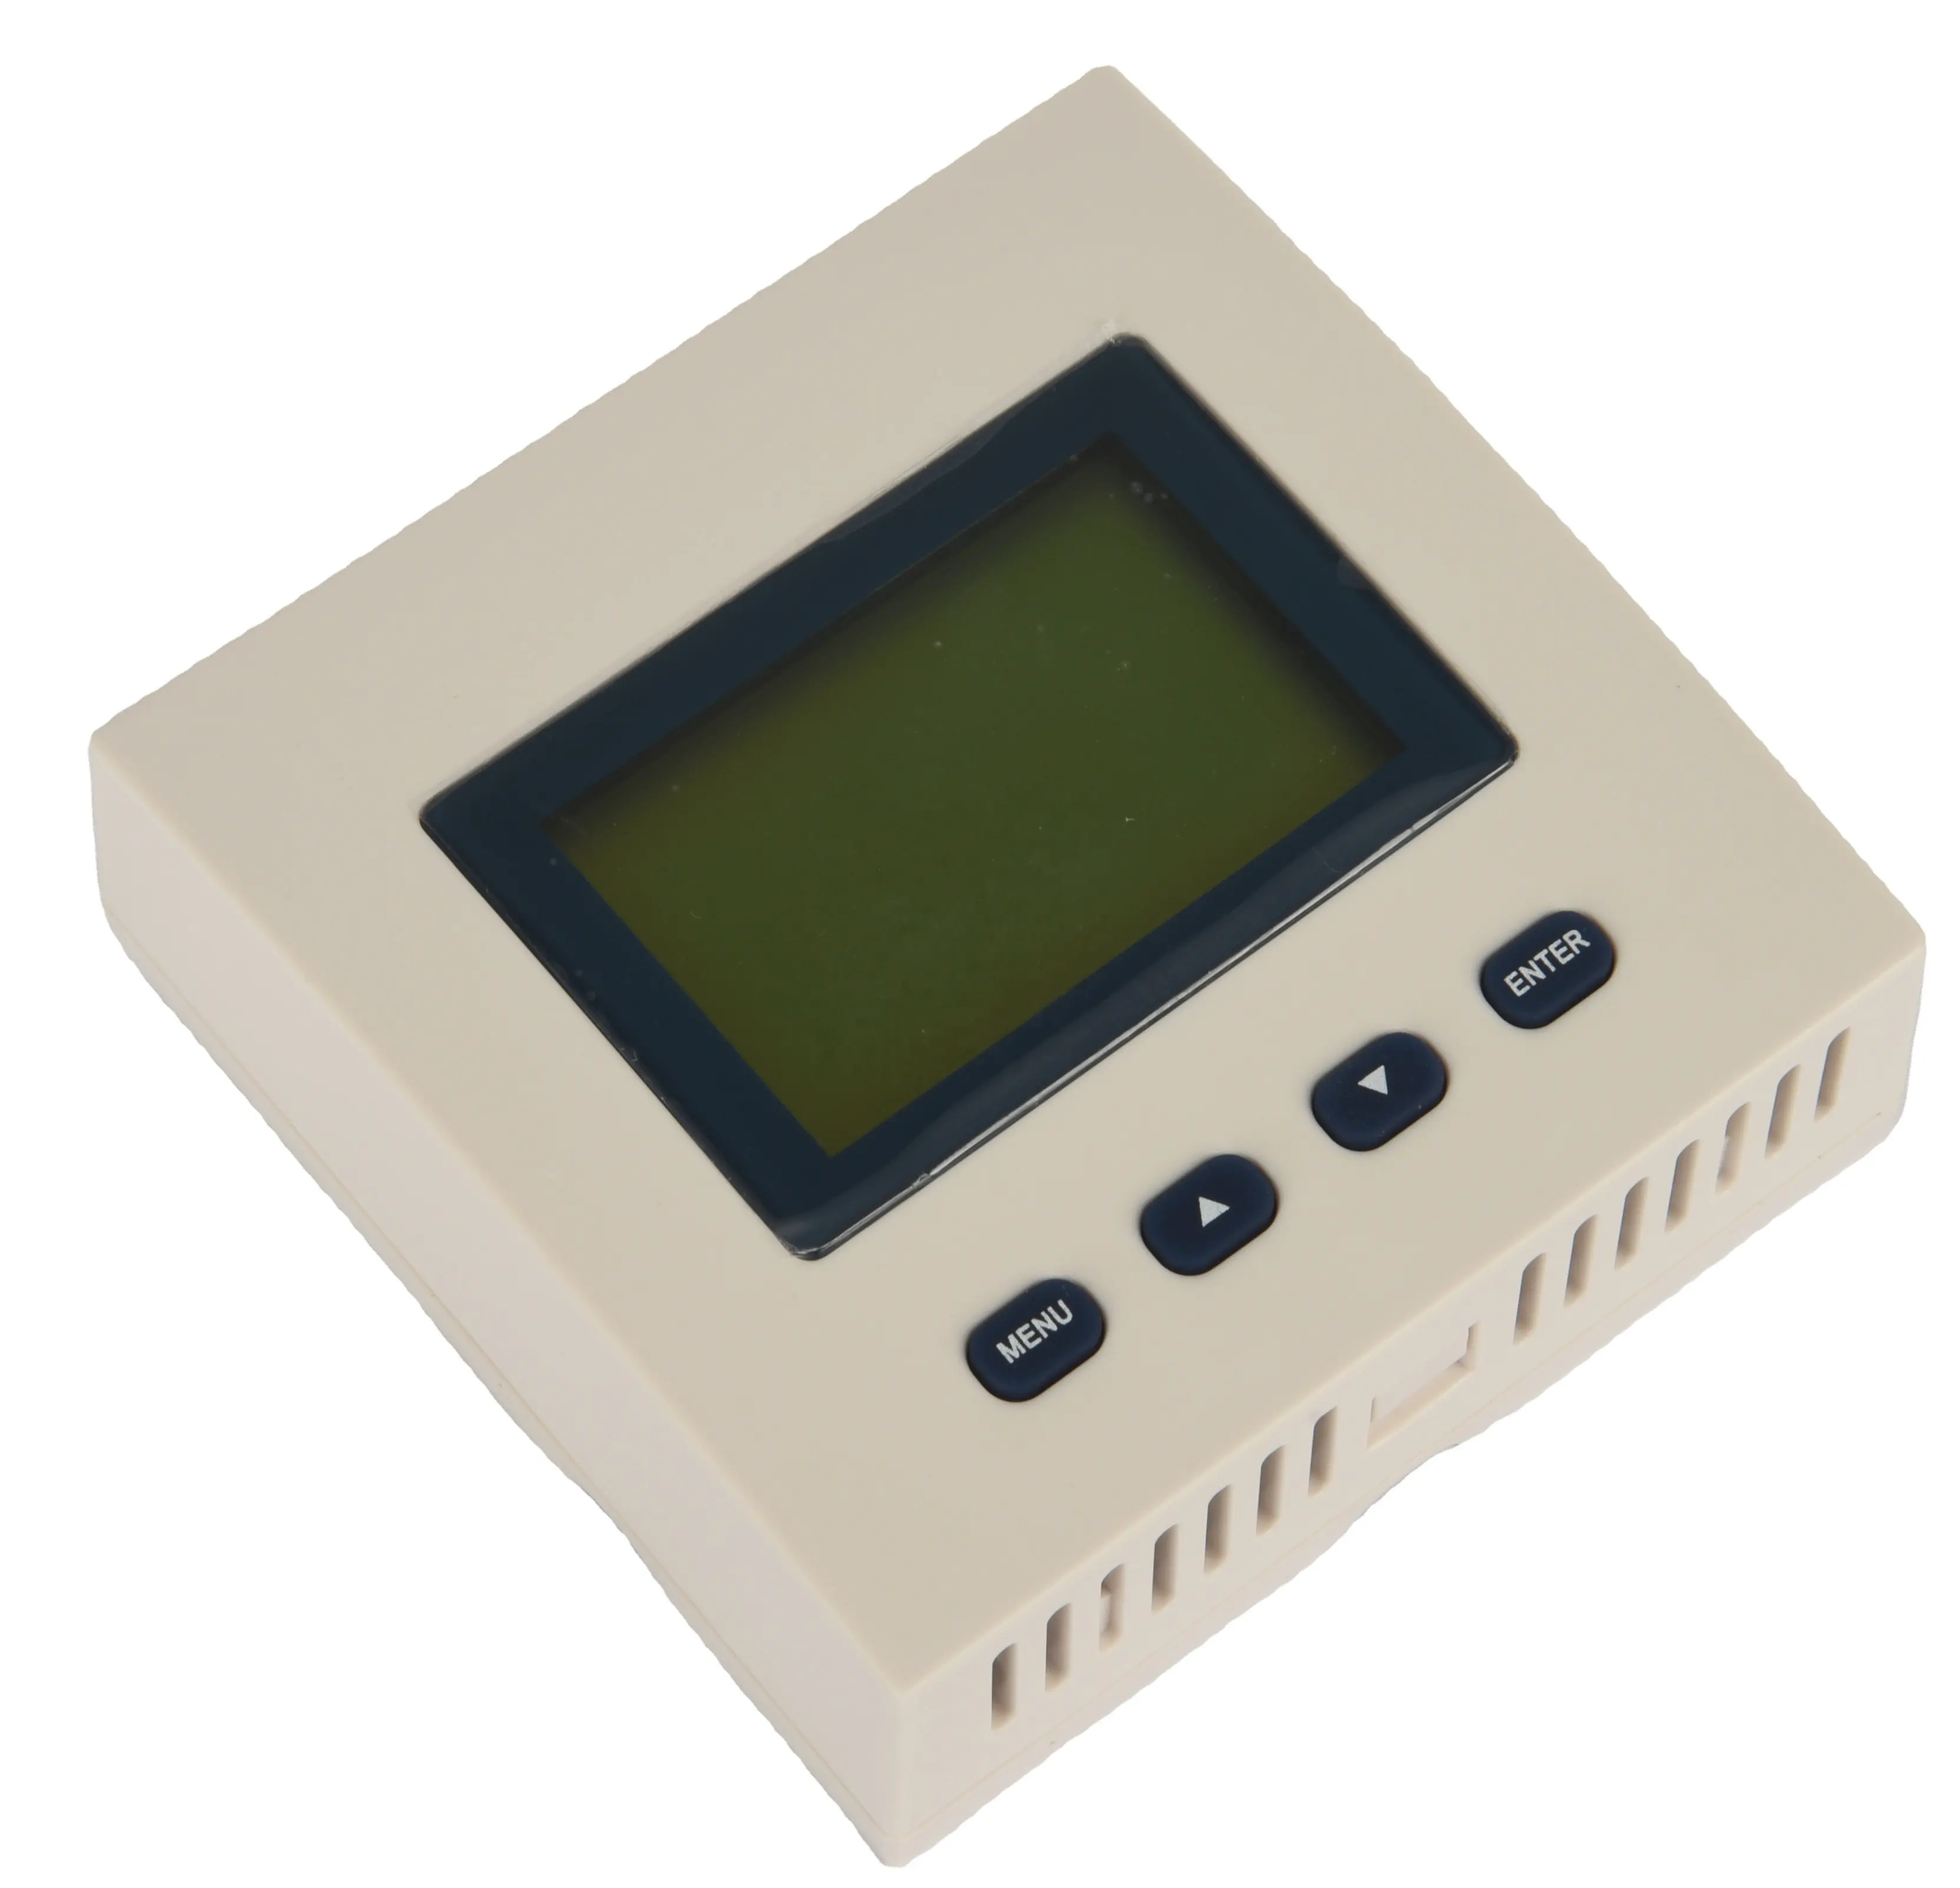 Anying Standaard Modbus Protocol Milieu Monitoring Systeem Temperatuur Vochtigheid Sensor Apparaat A-TH1